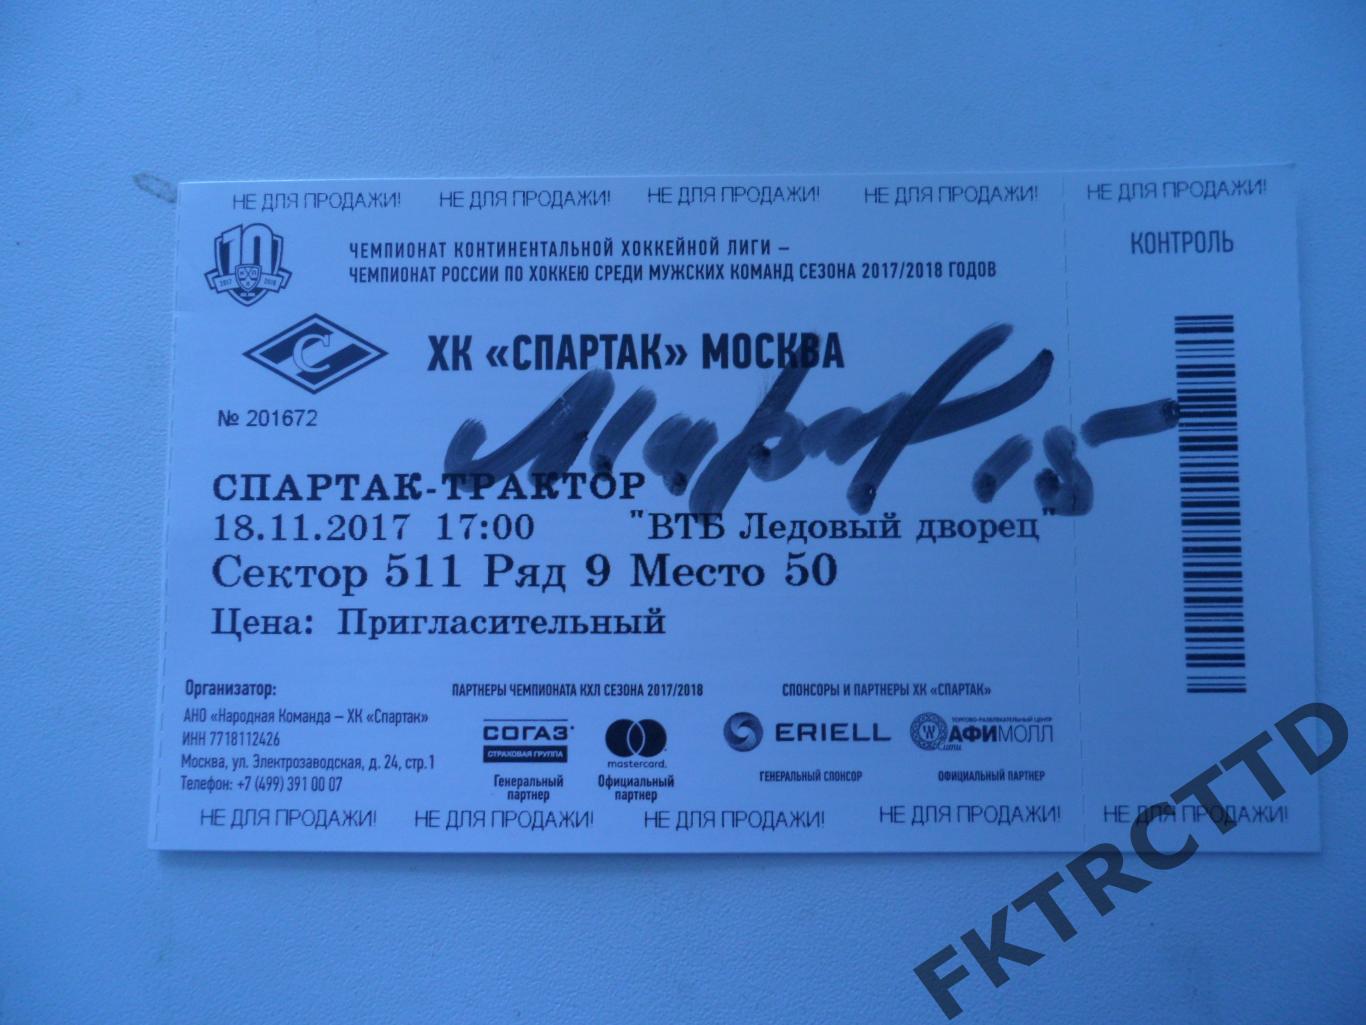 Фото-АВТОГРАФ-на билете Мартынюк